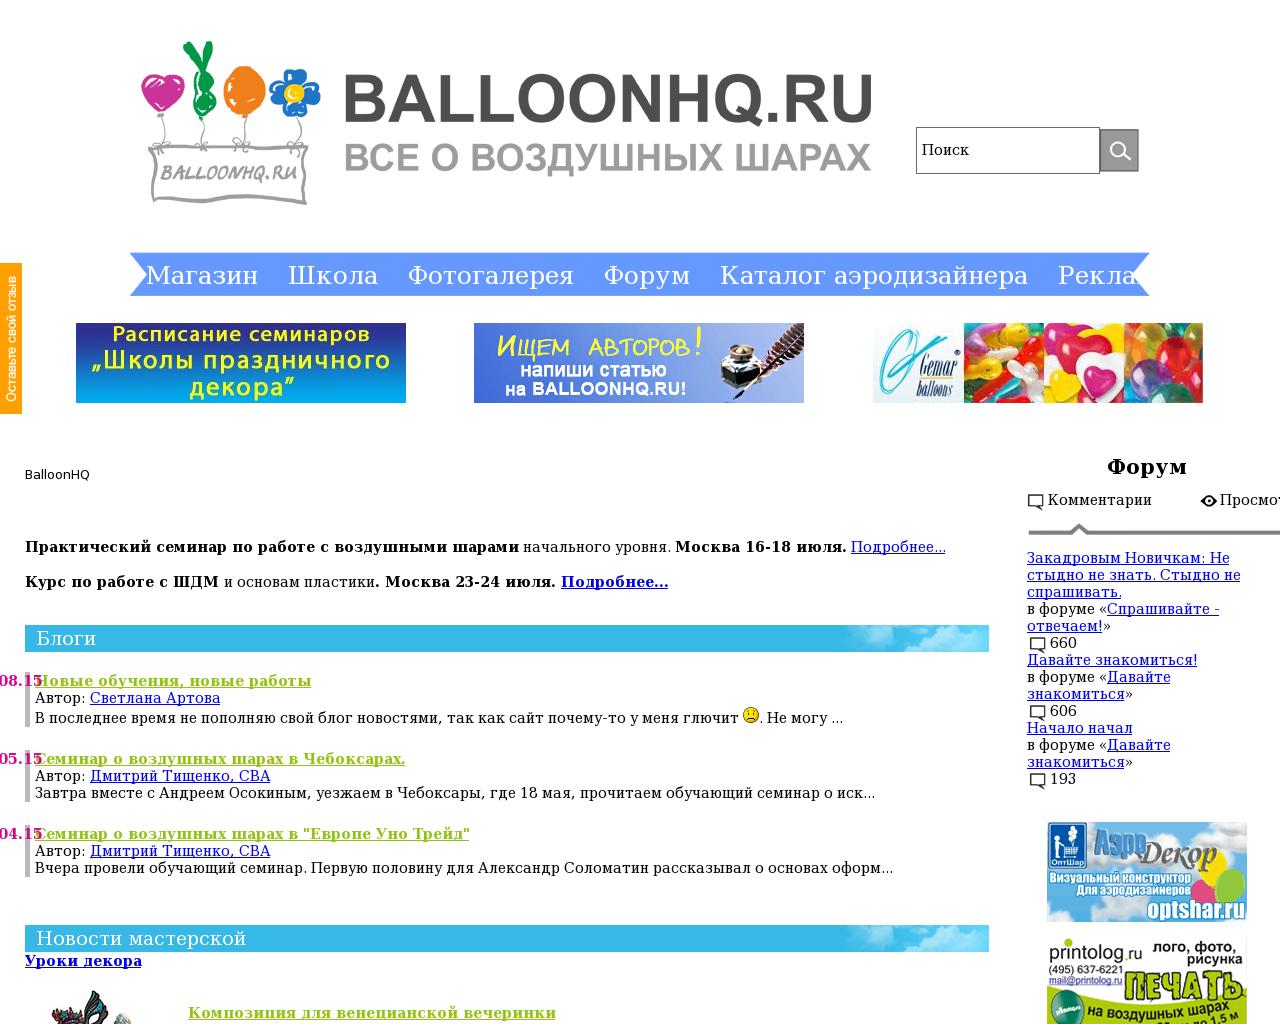 Изображение сайта balloonhq.ru в разрешении 1280x1024